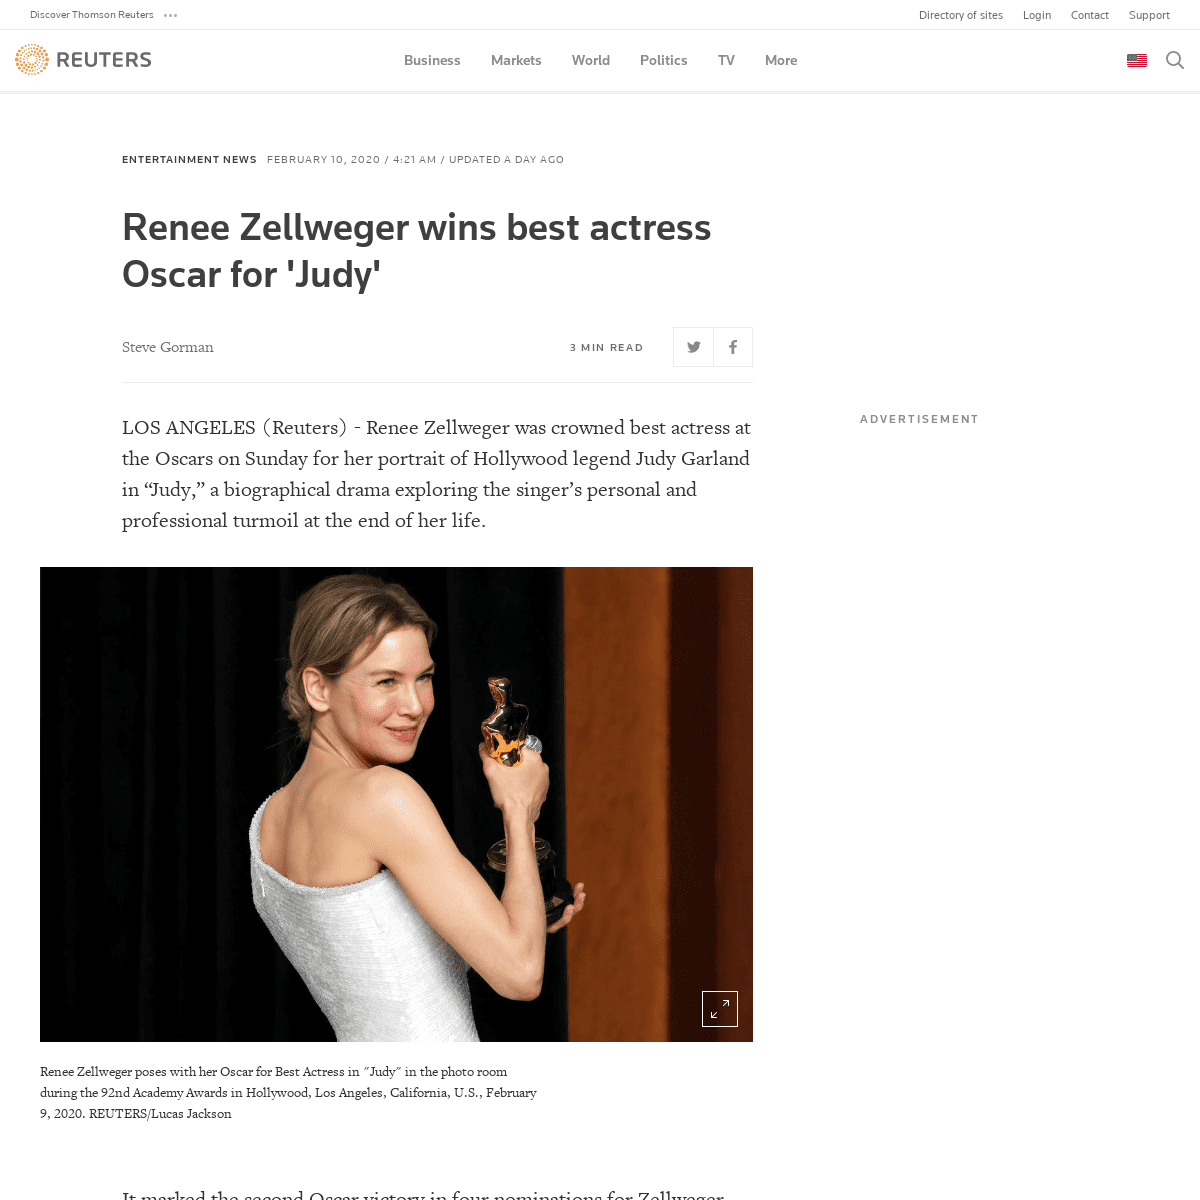 A complete backup of www.reuters.com/article/us-awards-oscars-actress/renee-zellweger-wins-best-actress-oscar-for-judy-idUSKBN20